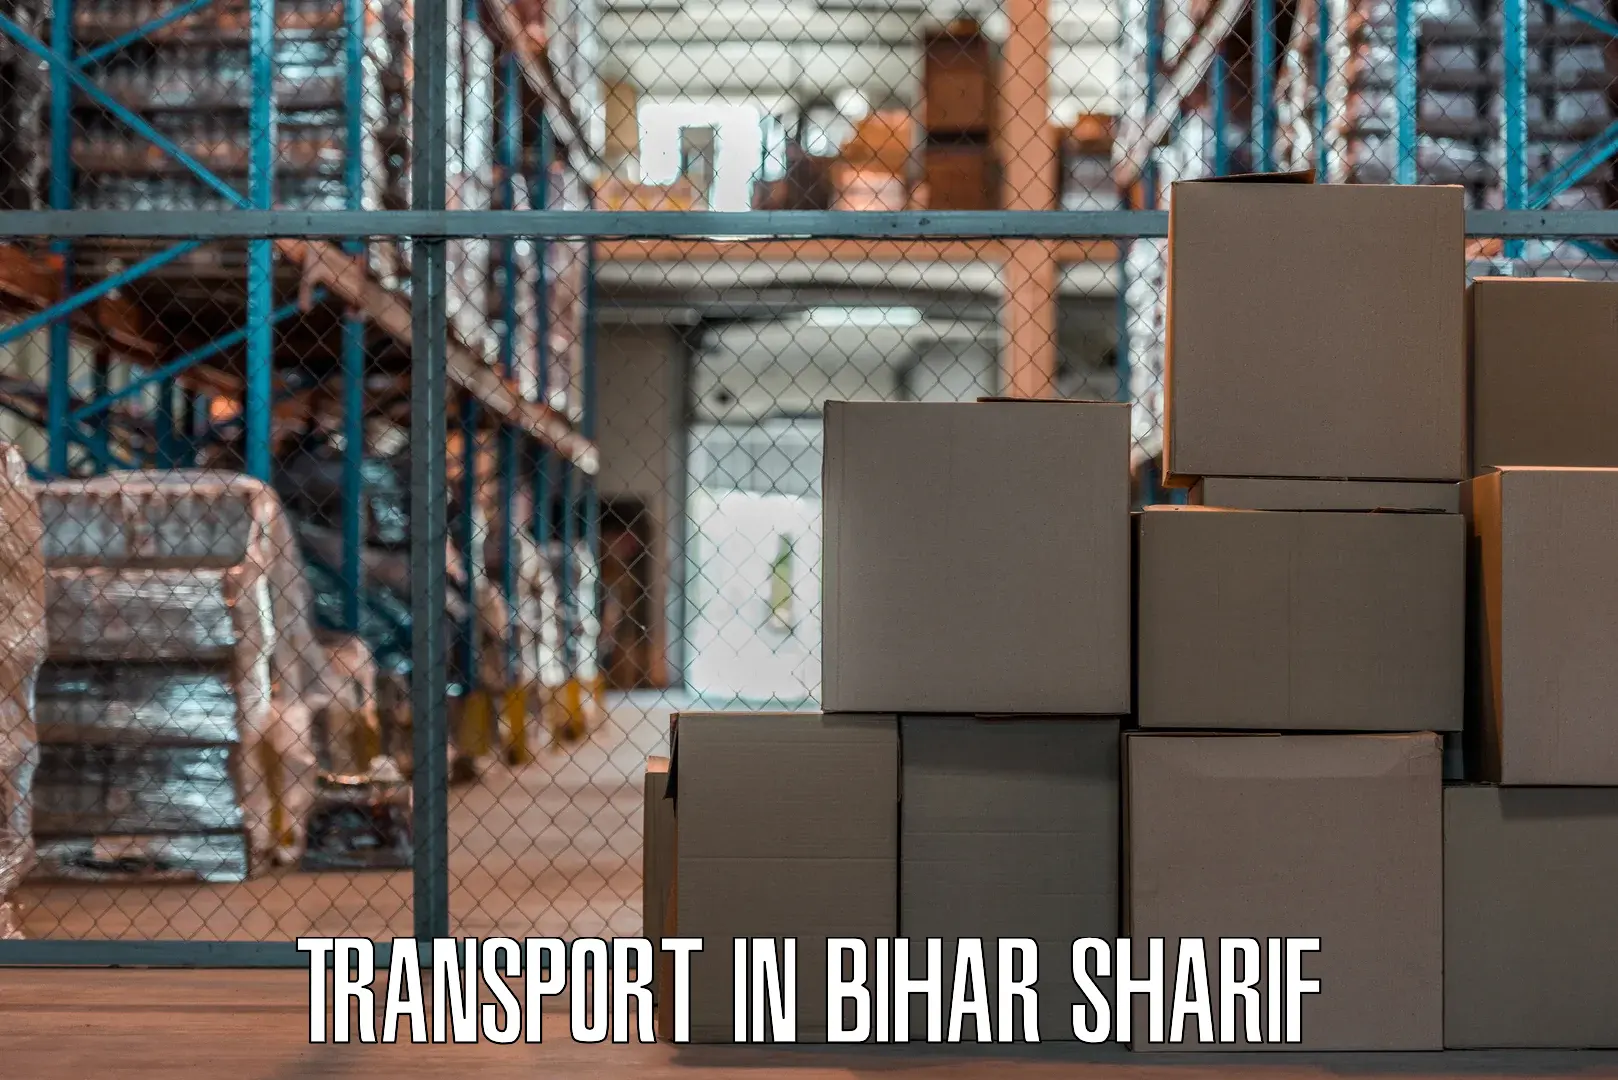 Transport shared services in Bihar Sharif